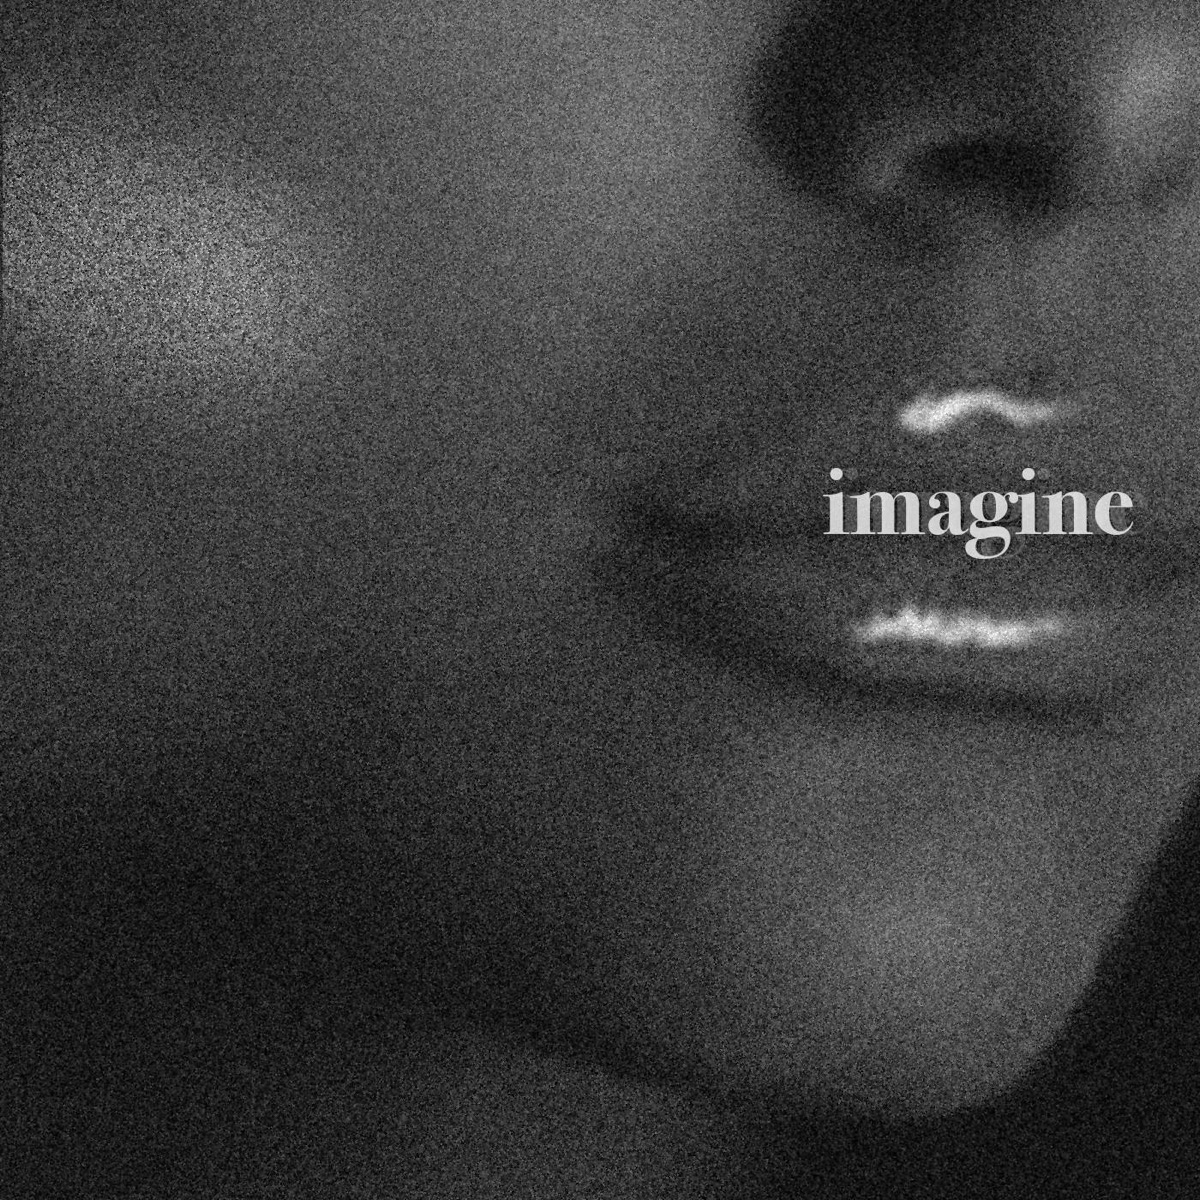 Imagine Album Cover By Mc Karaoke